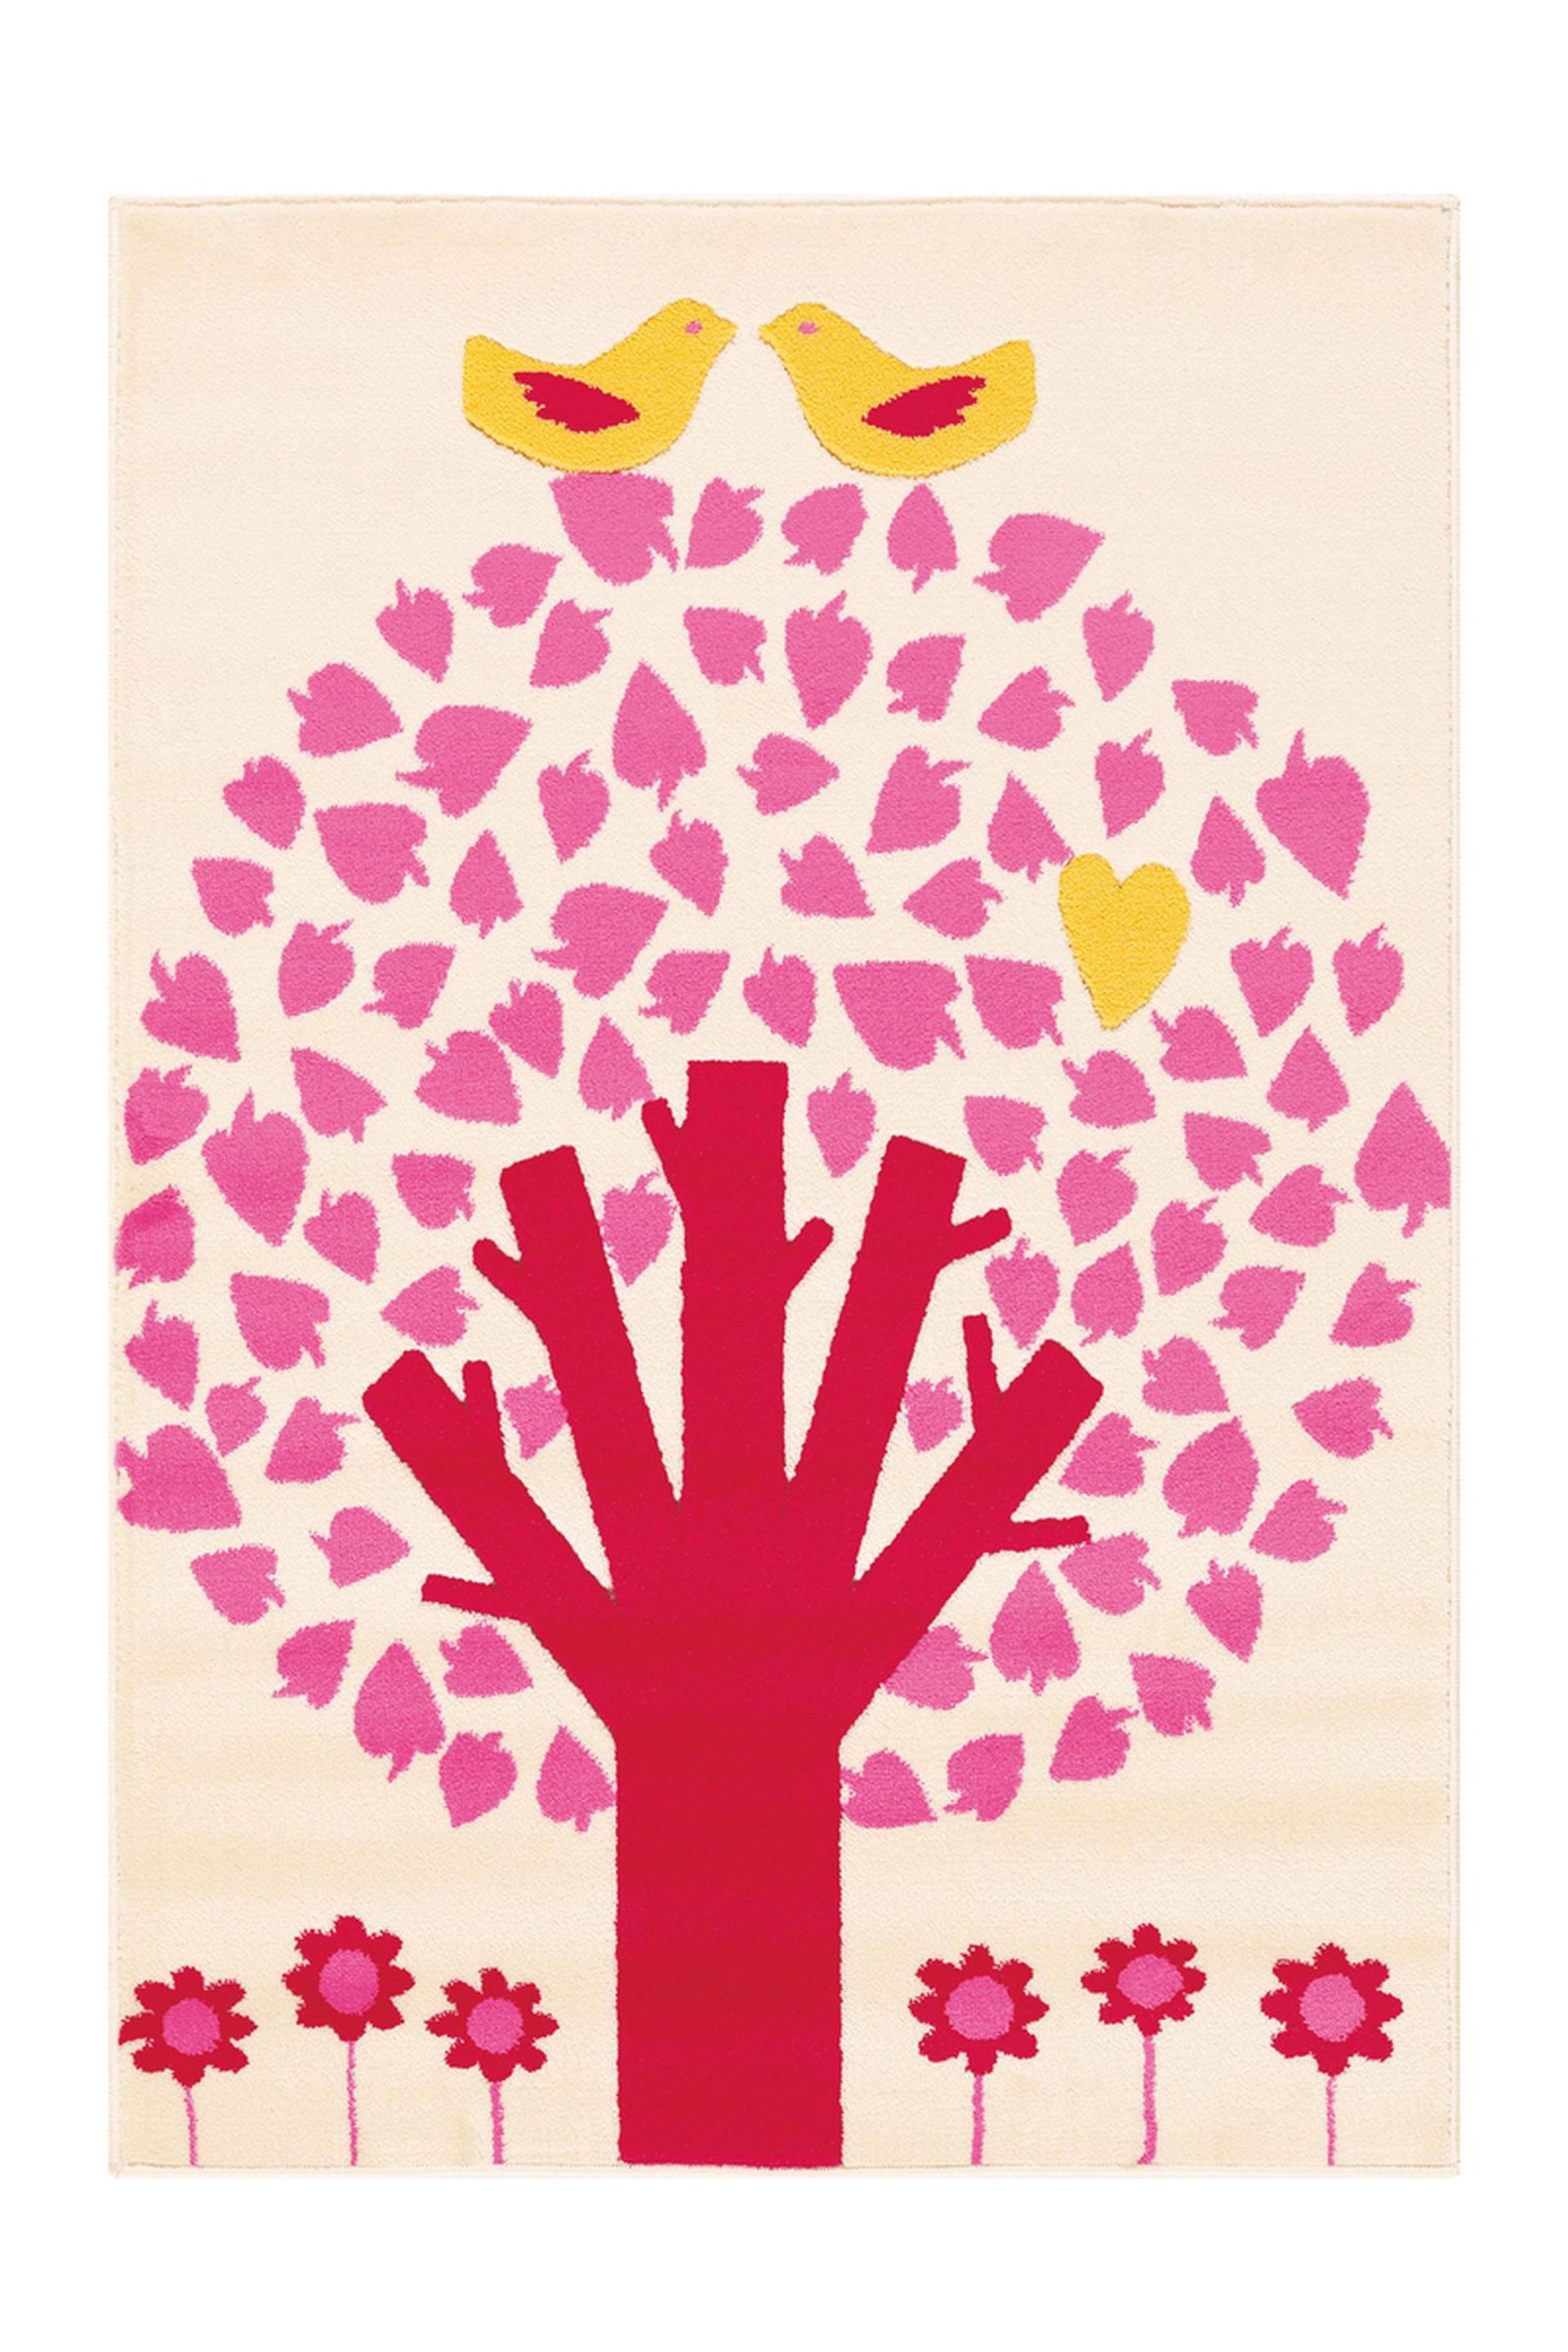 Teppich Lol Kids 4429 Creme / Pink 100 cm x 150 cm